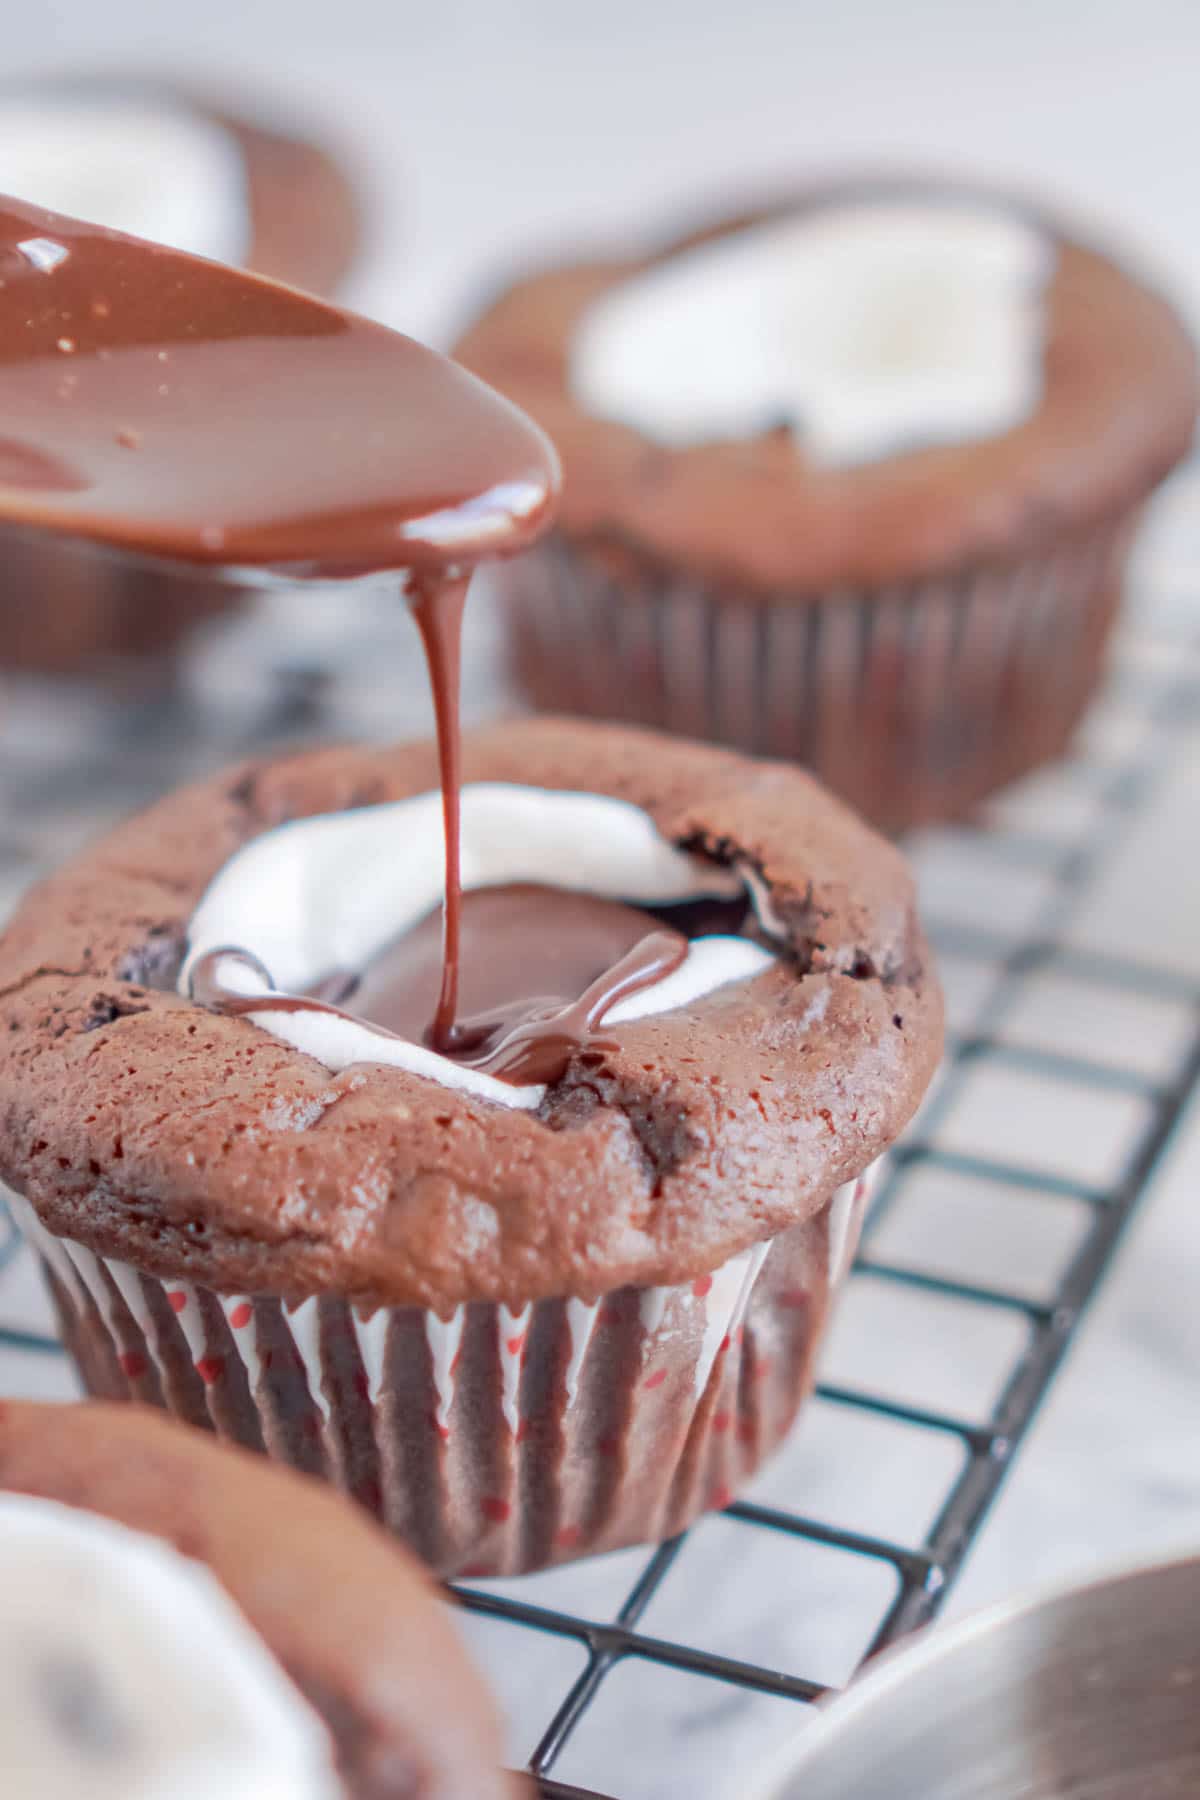 Spoon pouring chocolate glaze on chocolate cupcakes